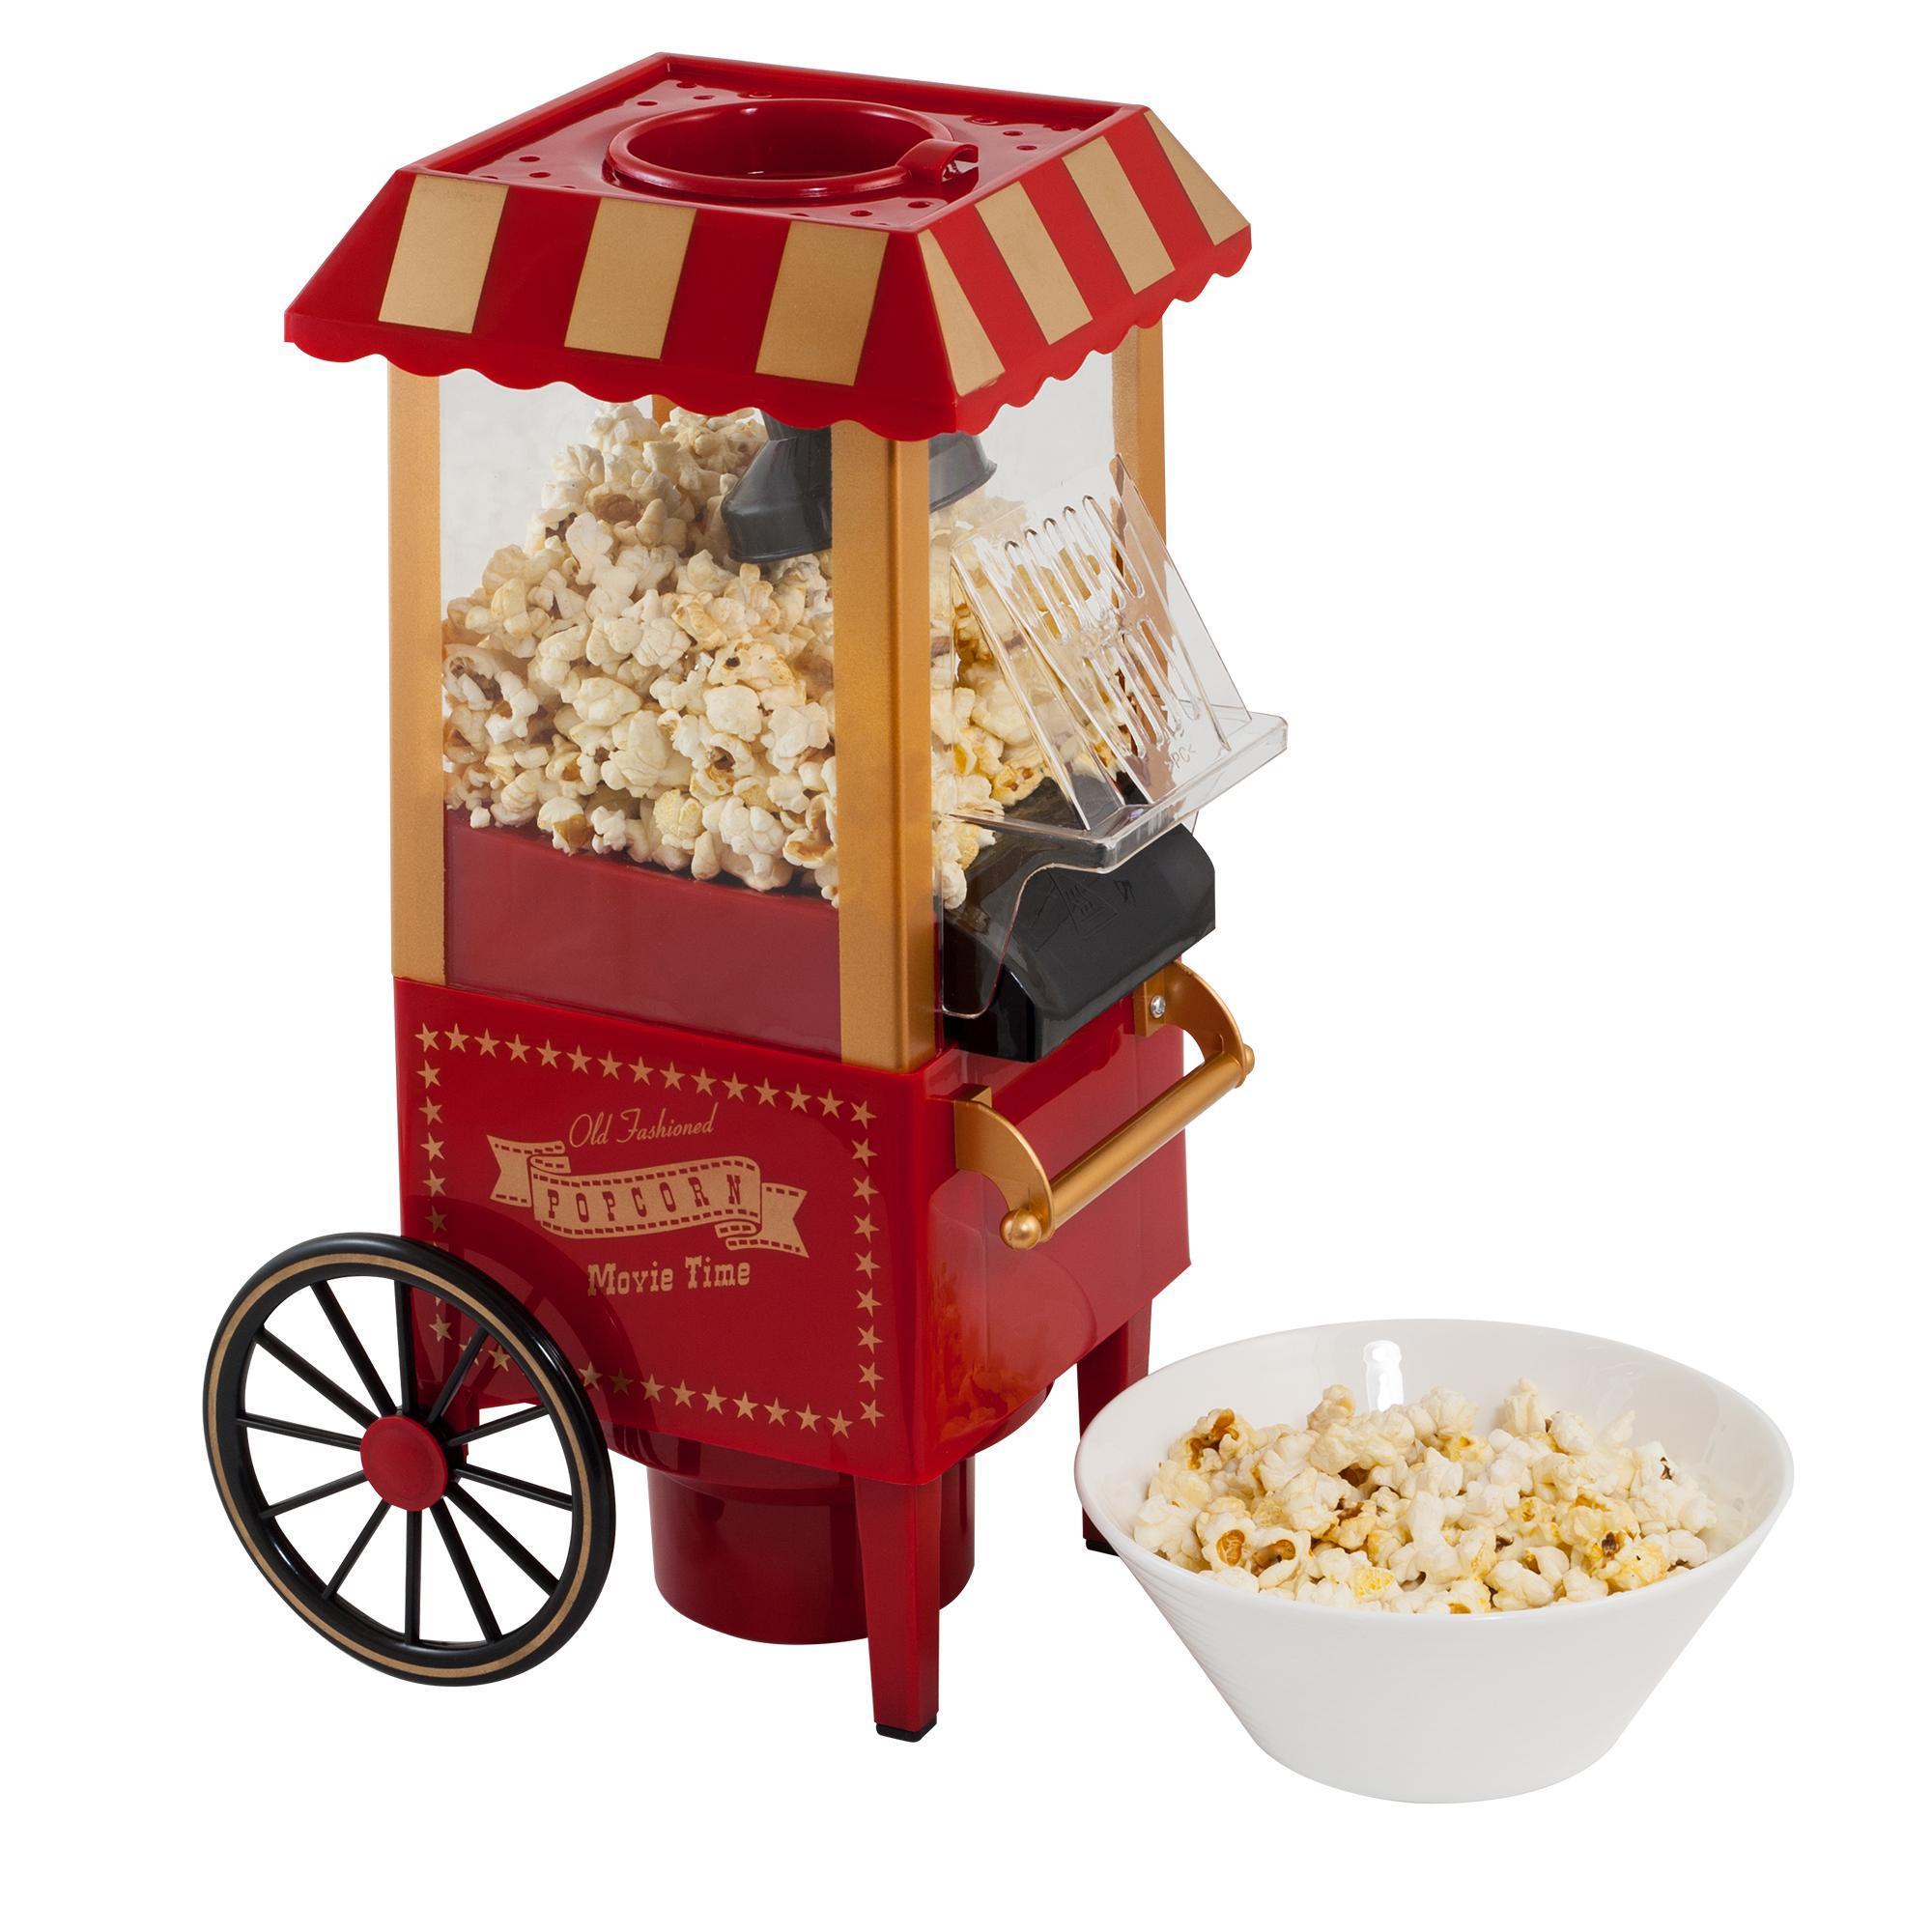 Se Retro Popcorn Maskine m/hjul (lav popcorn uden olie) hos Satana.dk